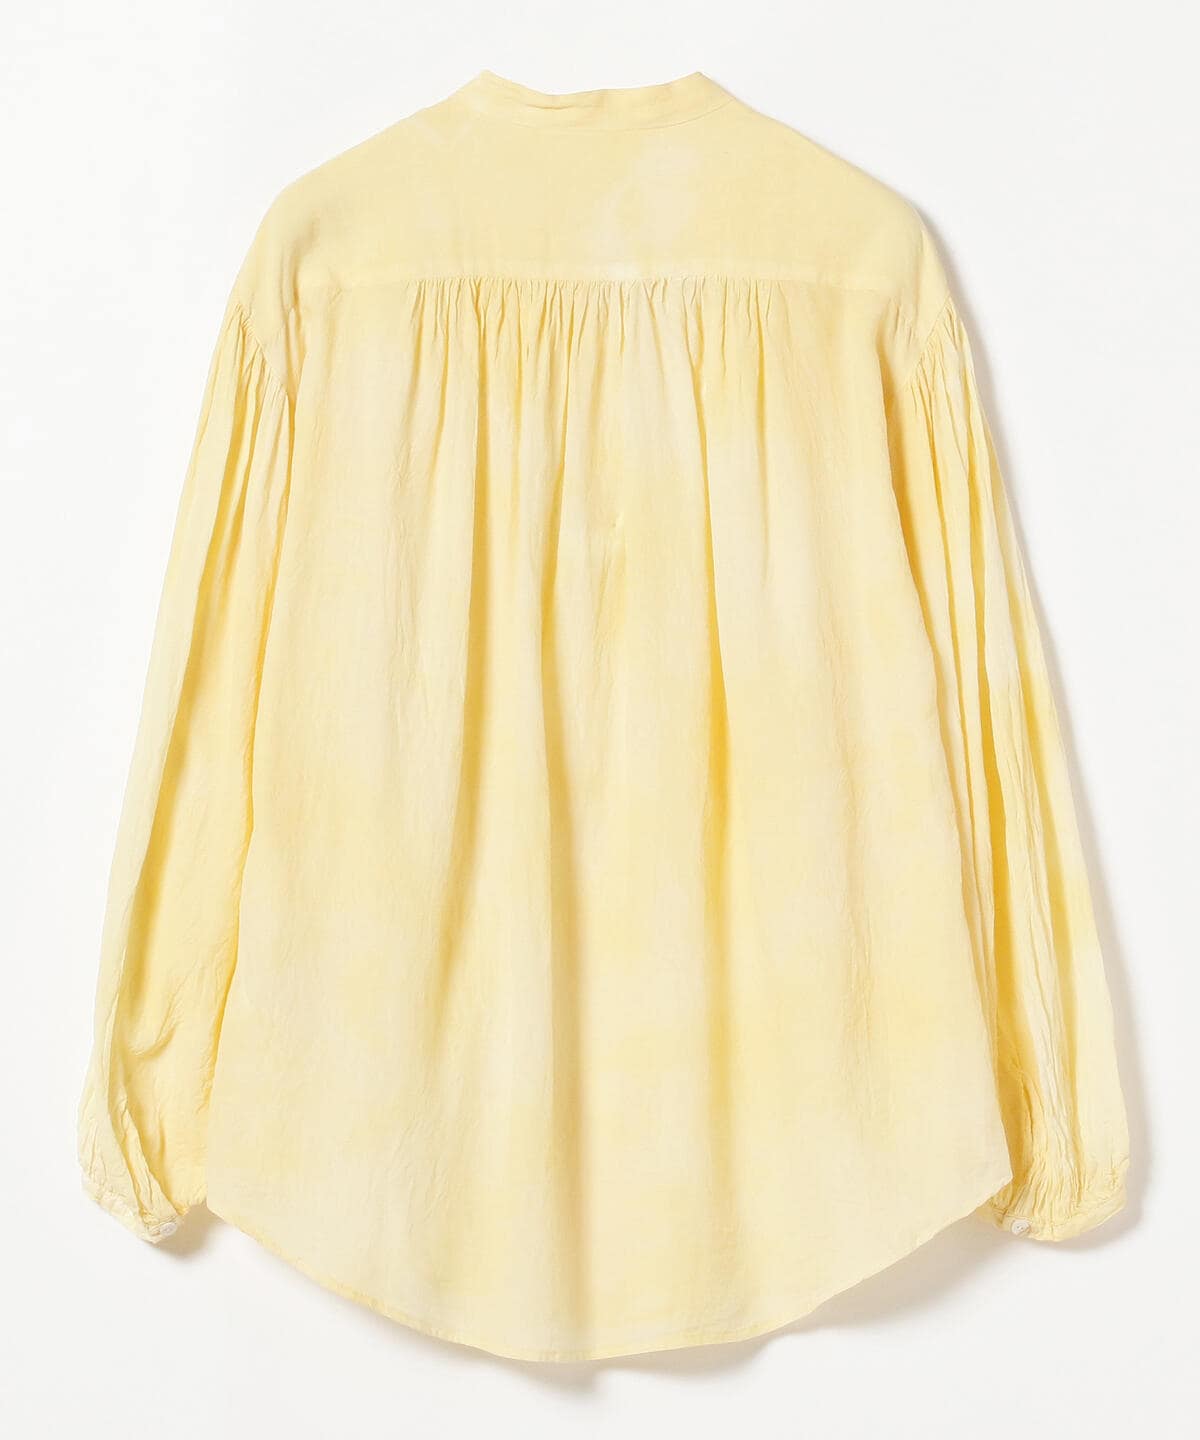 enrica コットンオーガンジー 2way blouse WHITE floraltrendy.com